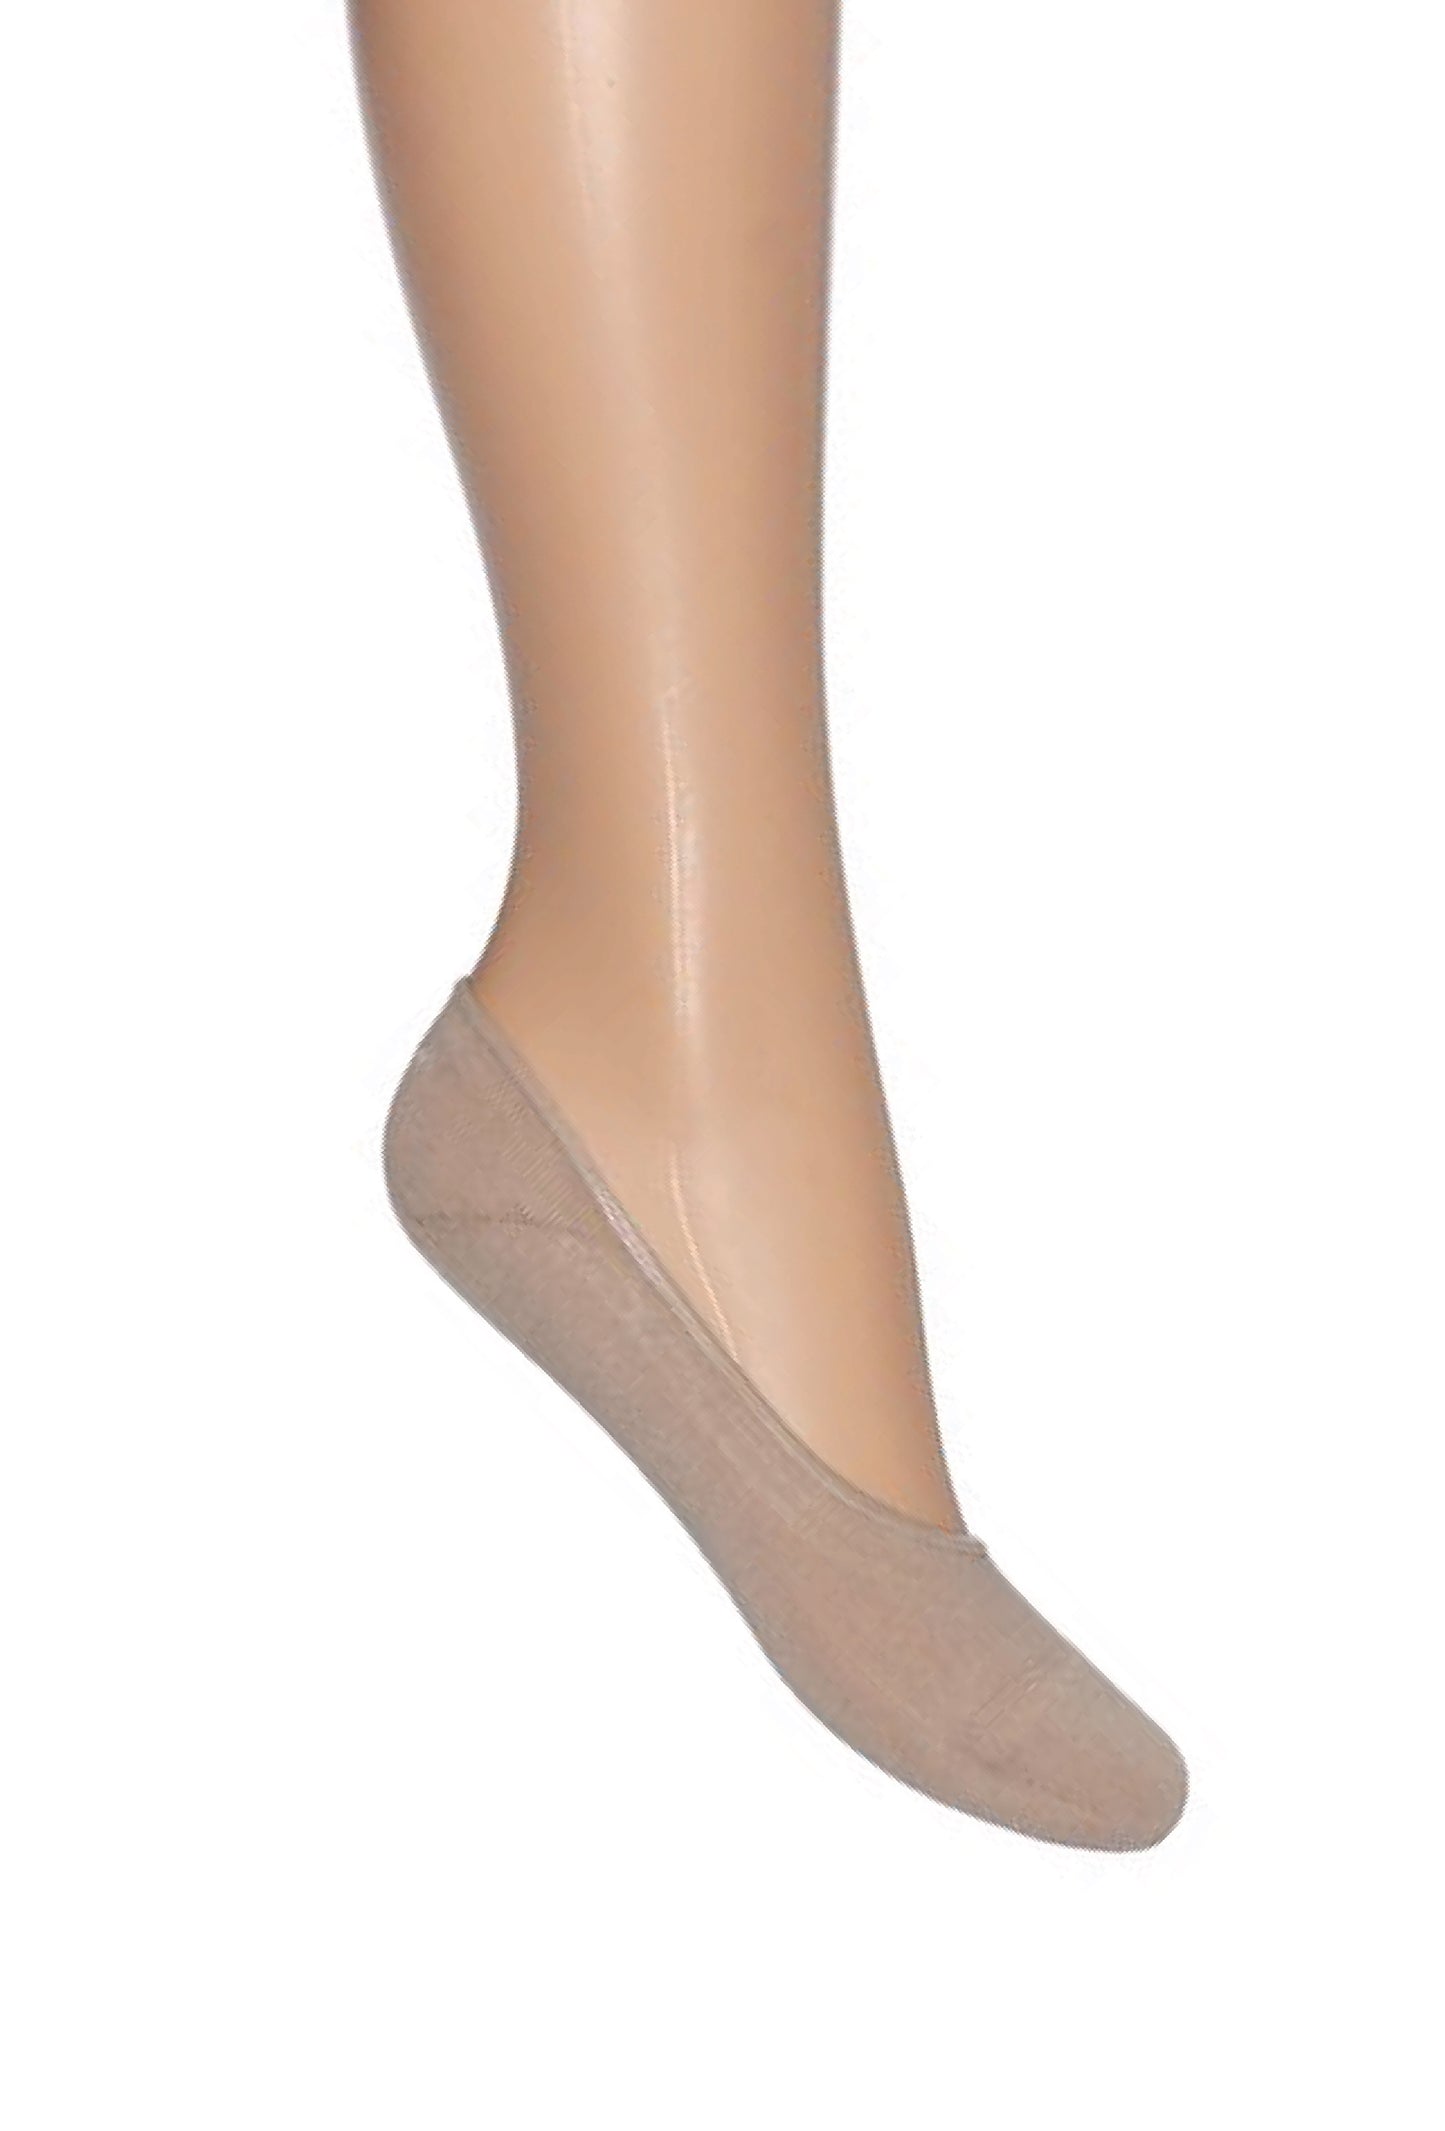 Bonnie Doon BN46.10.10 Cotton Footie - Nude cotton no show invisible shoe liner socks.